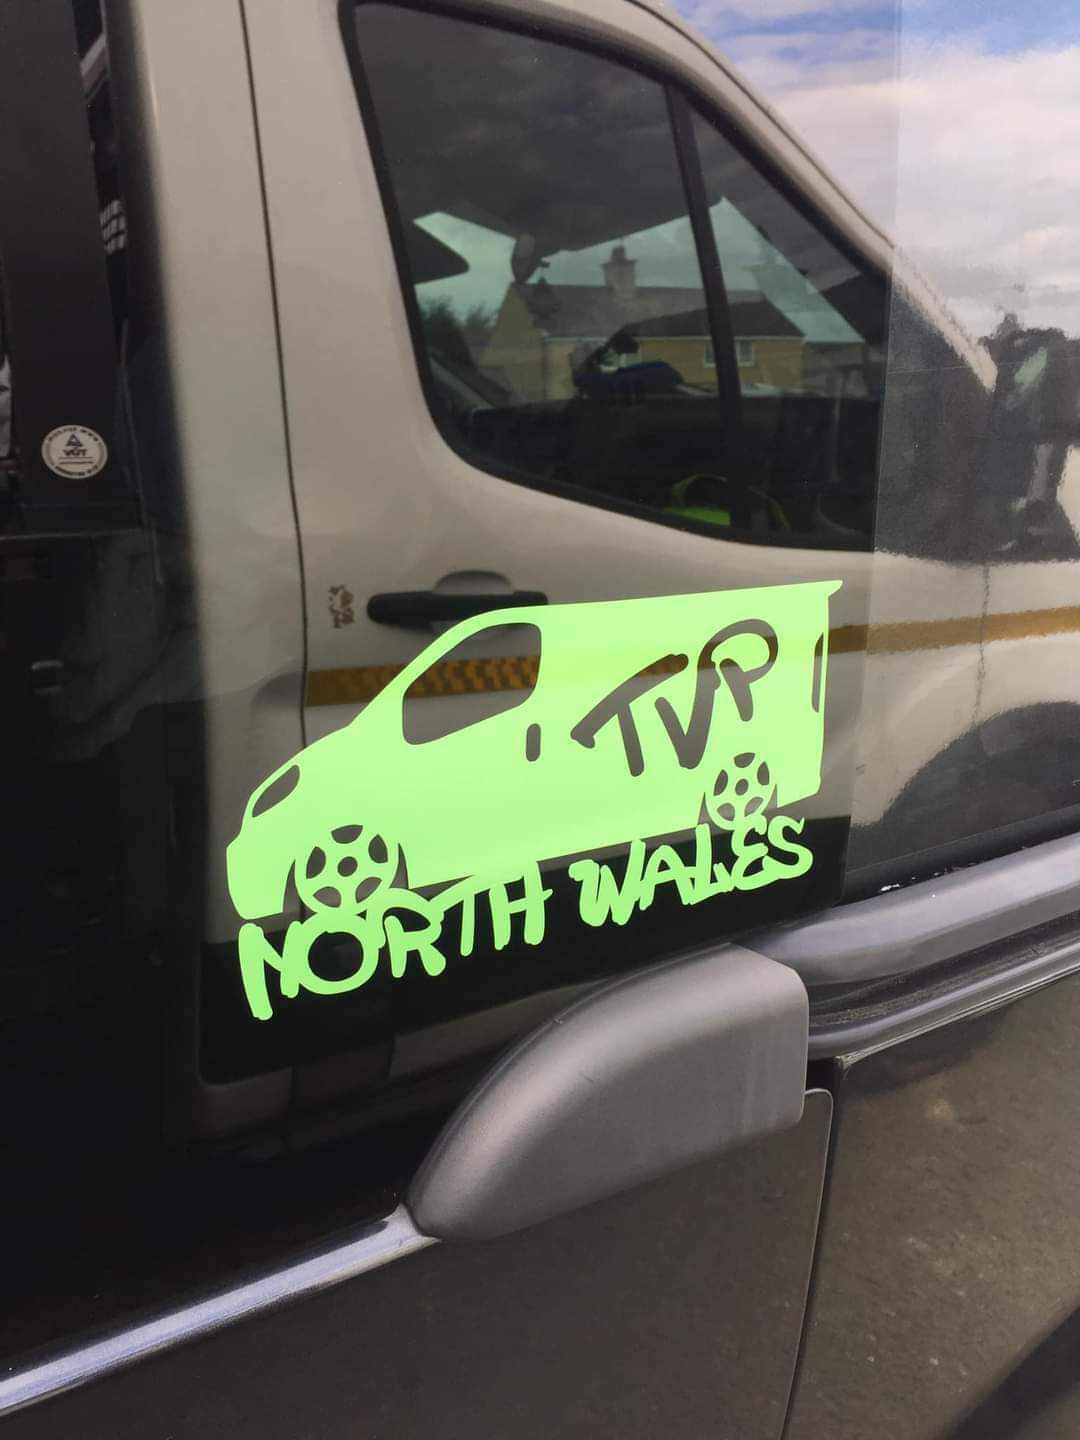 TVP North WALES Van Sticker - Facebook Group